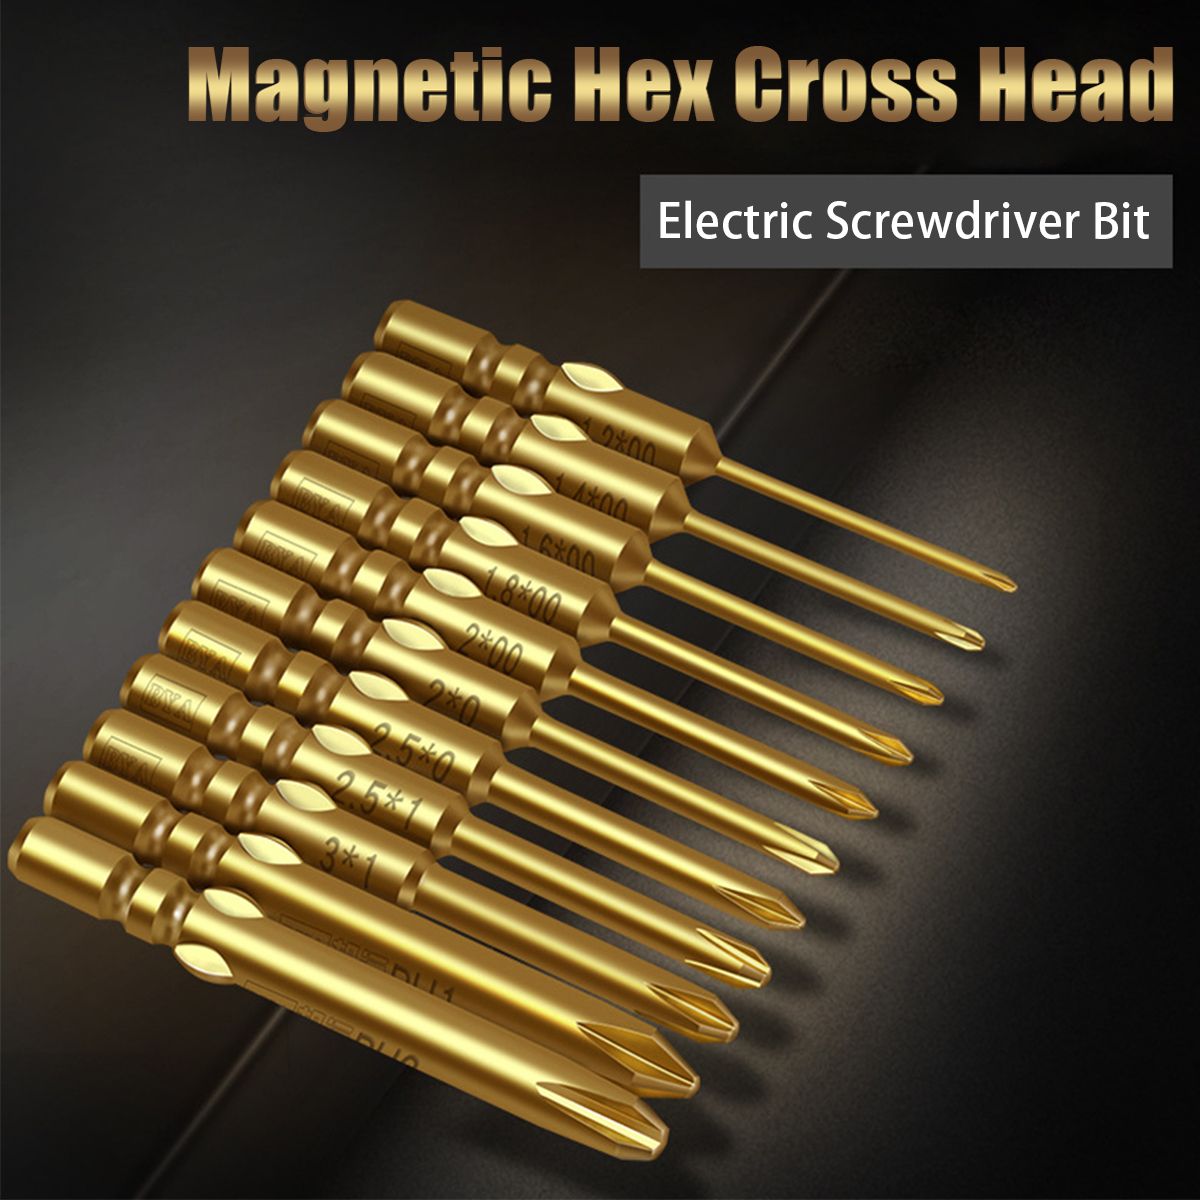 10Pcs-40mm-Magnetic-Screwdriver-Bits-Hex-Cross-Head-PH0-PH1-PH2-Bit-For-Electric-Screwdriver-1556070